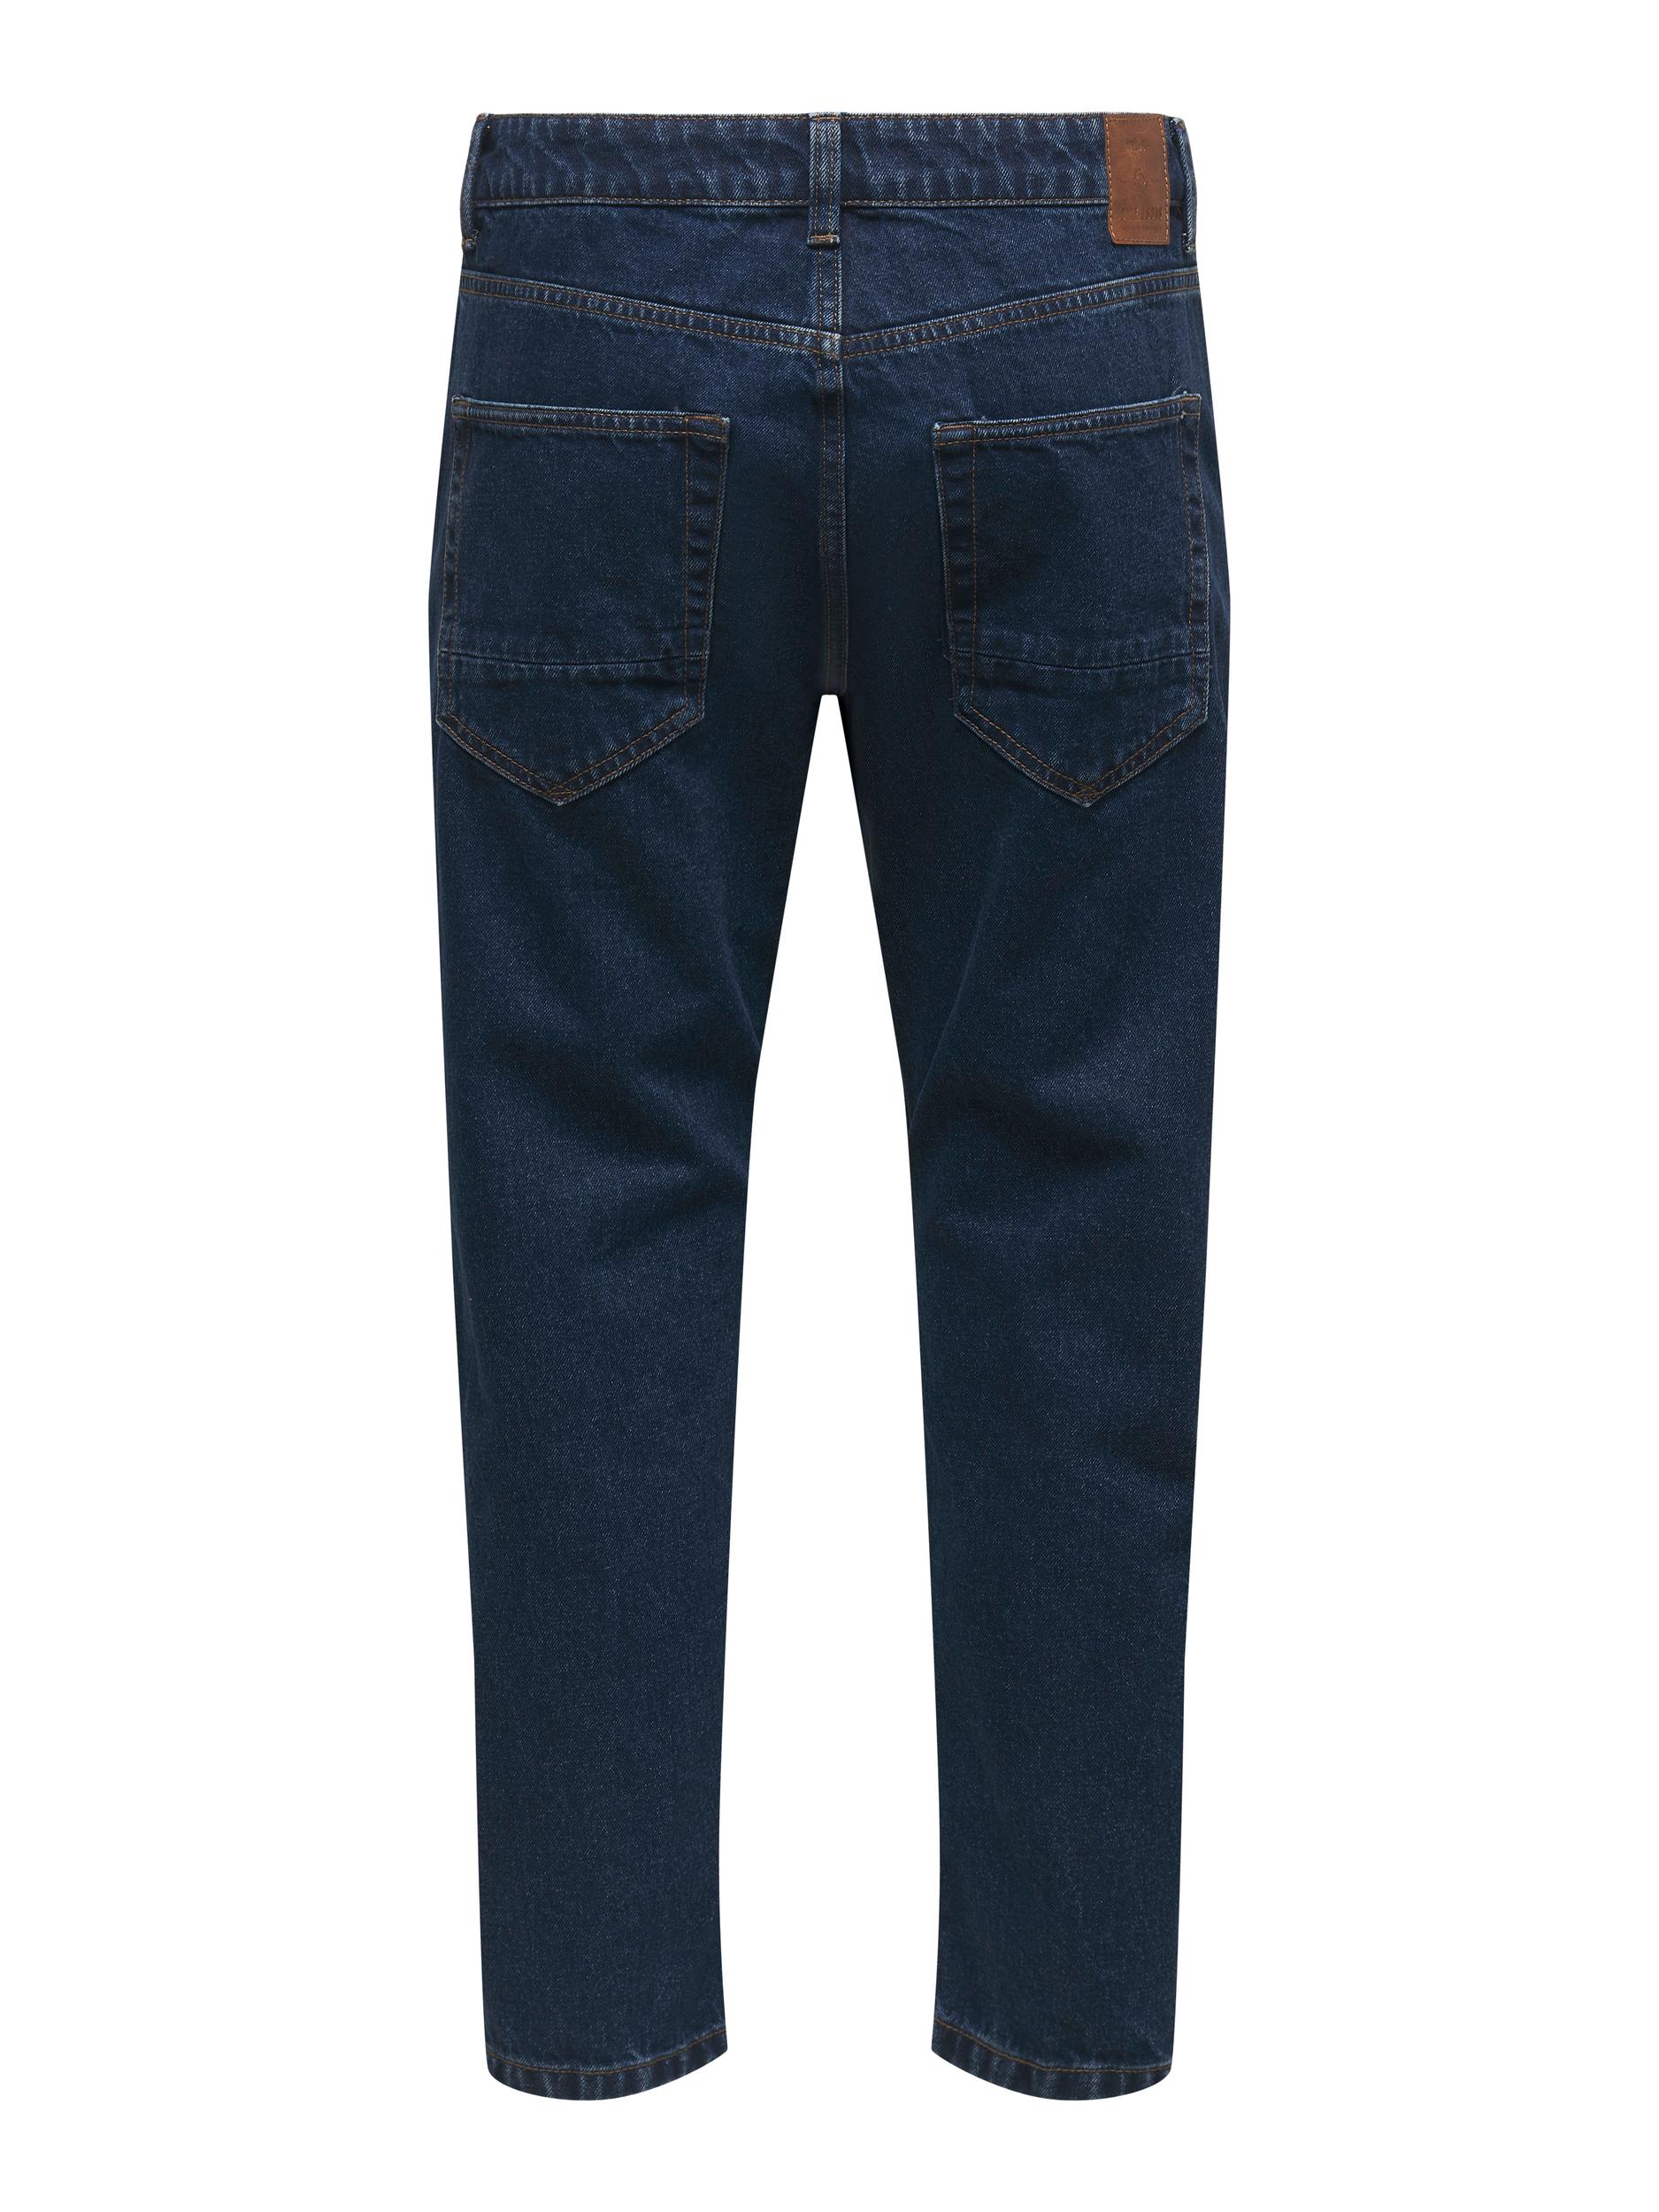 ONLY Avi Beam Life Jeans, Blue Denim, W30/L30